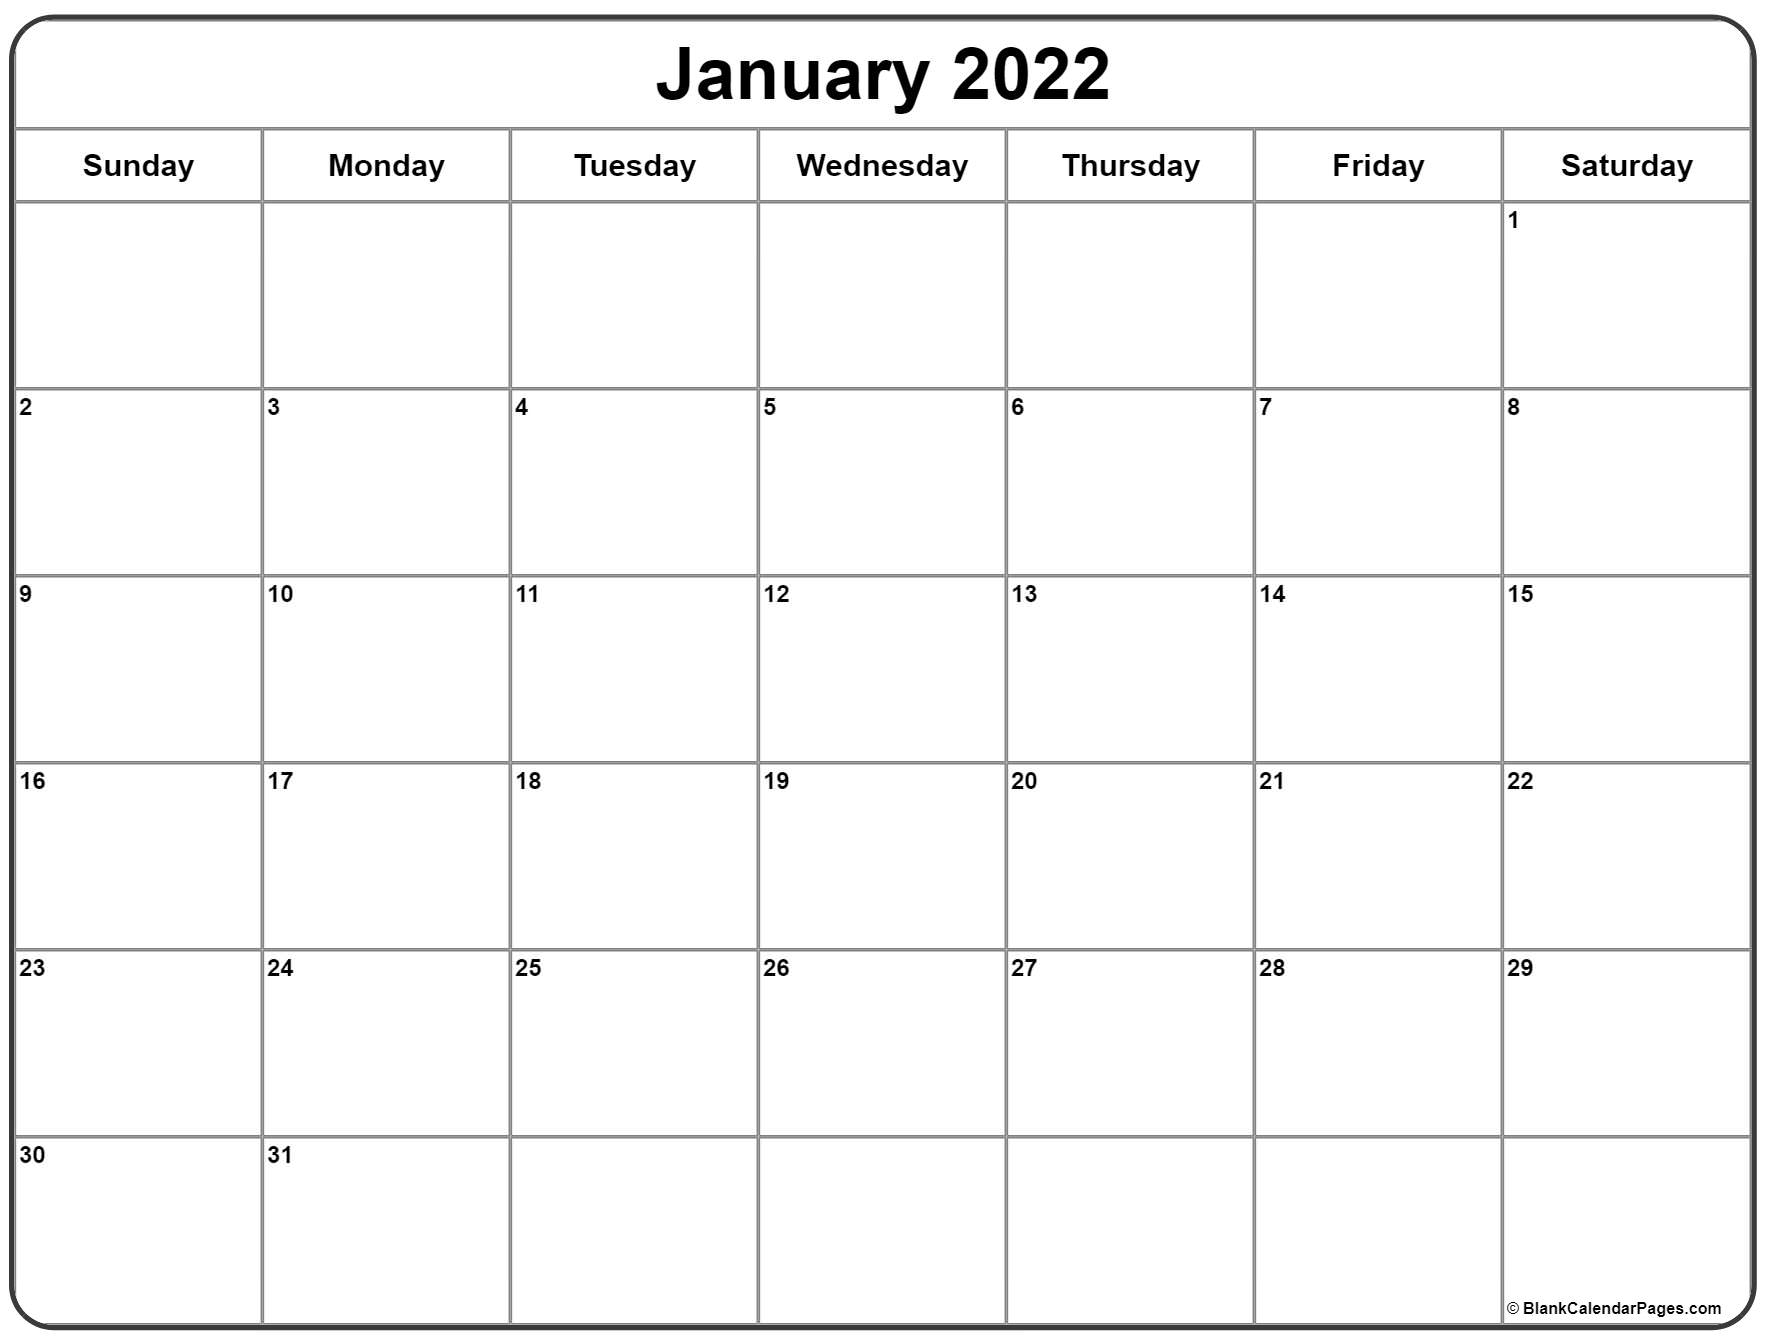 Collect Online Calendar January 2022